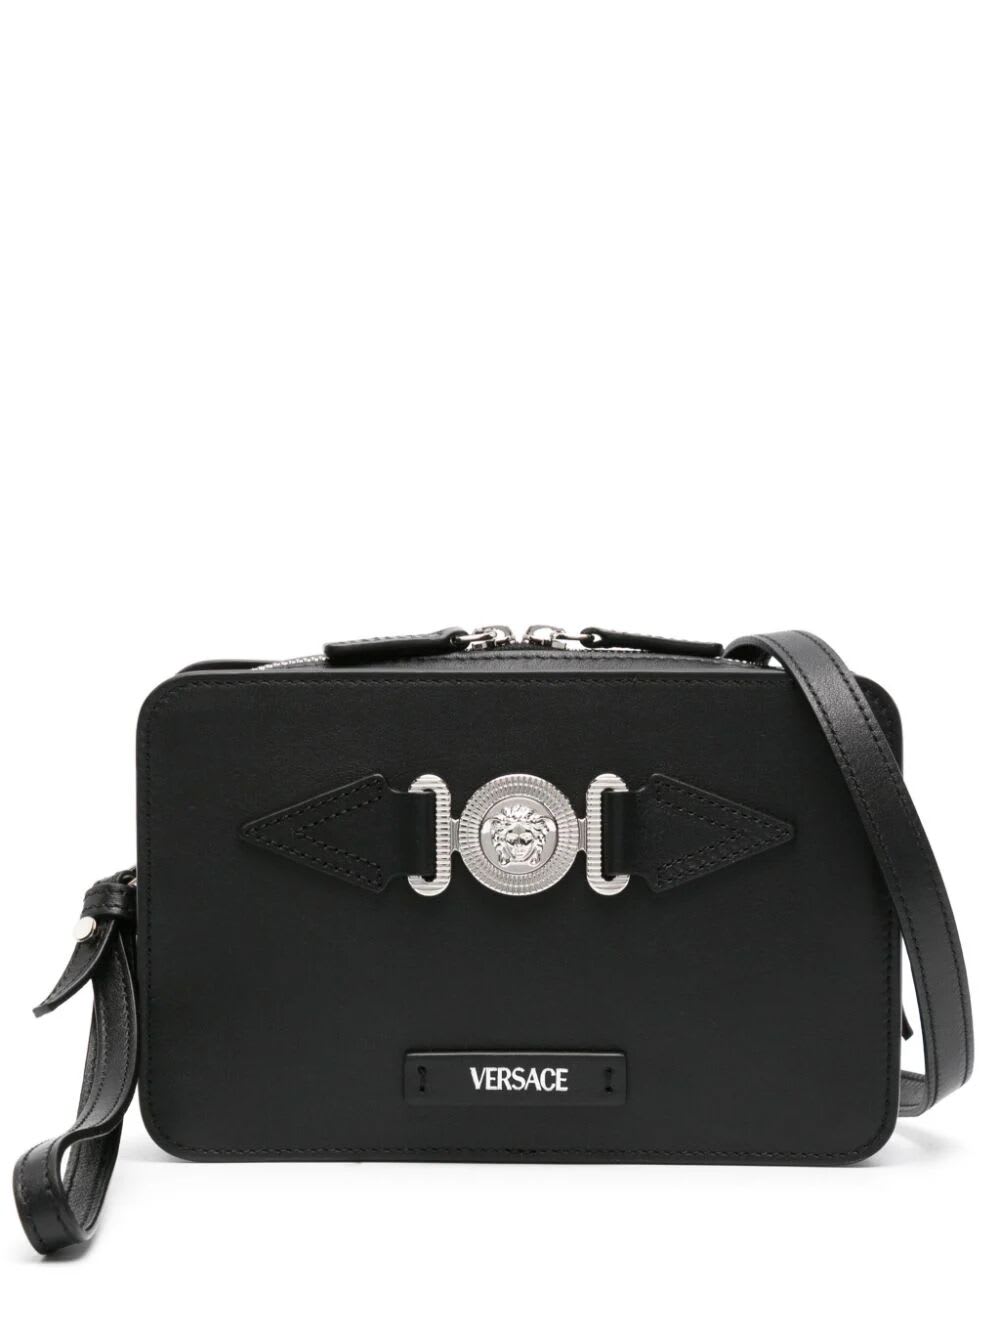 Versace Camera Bag Calf In P Black Palladium